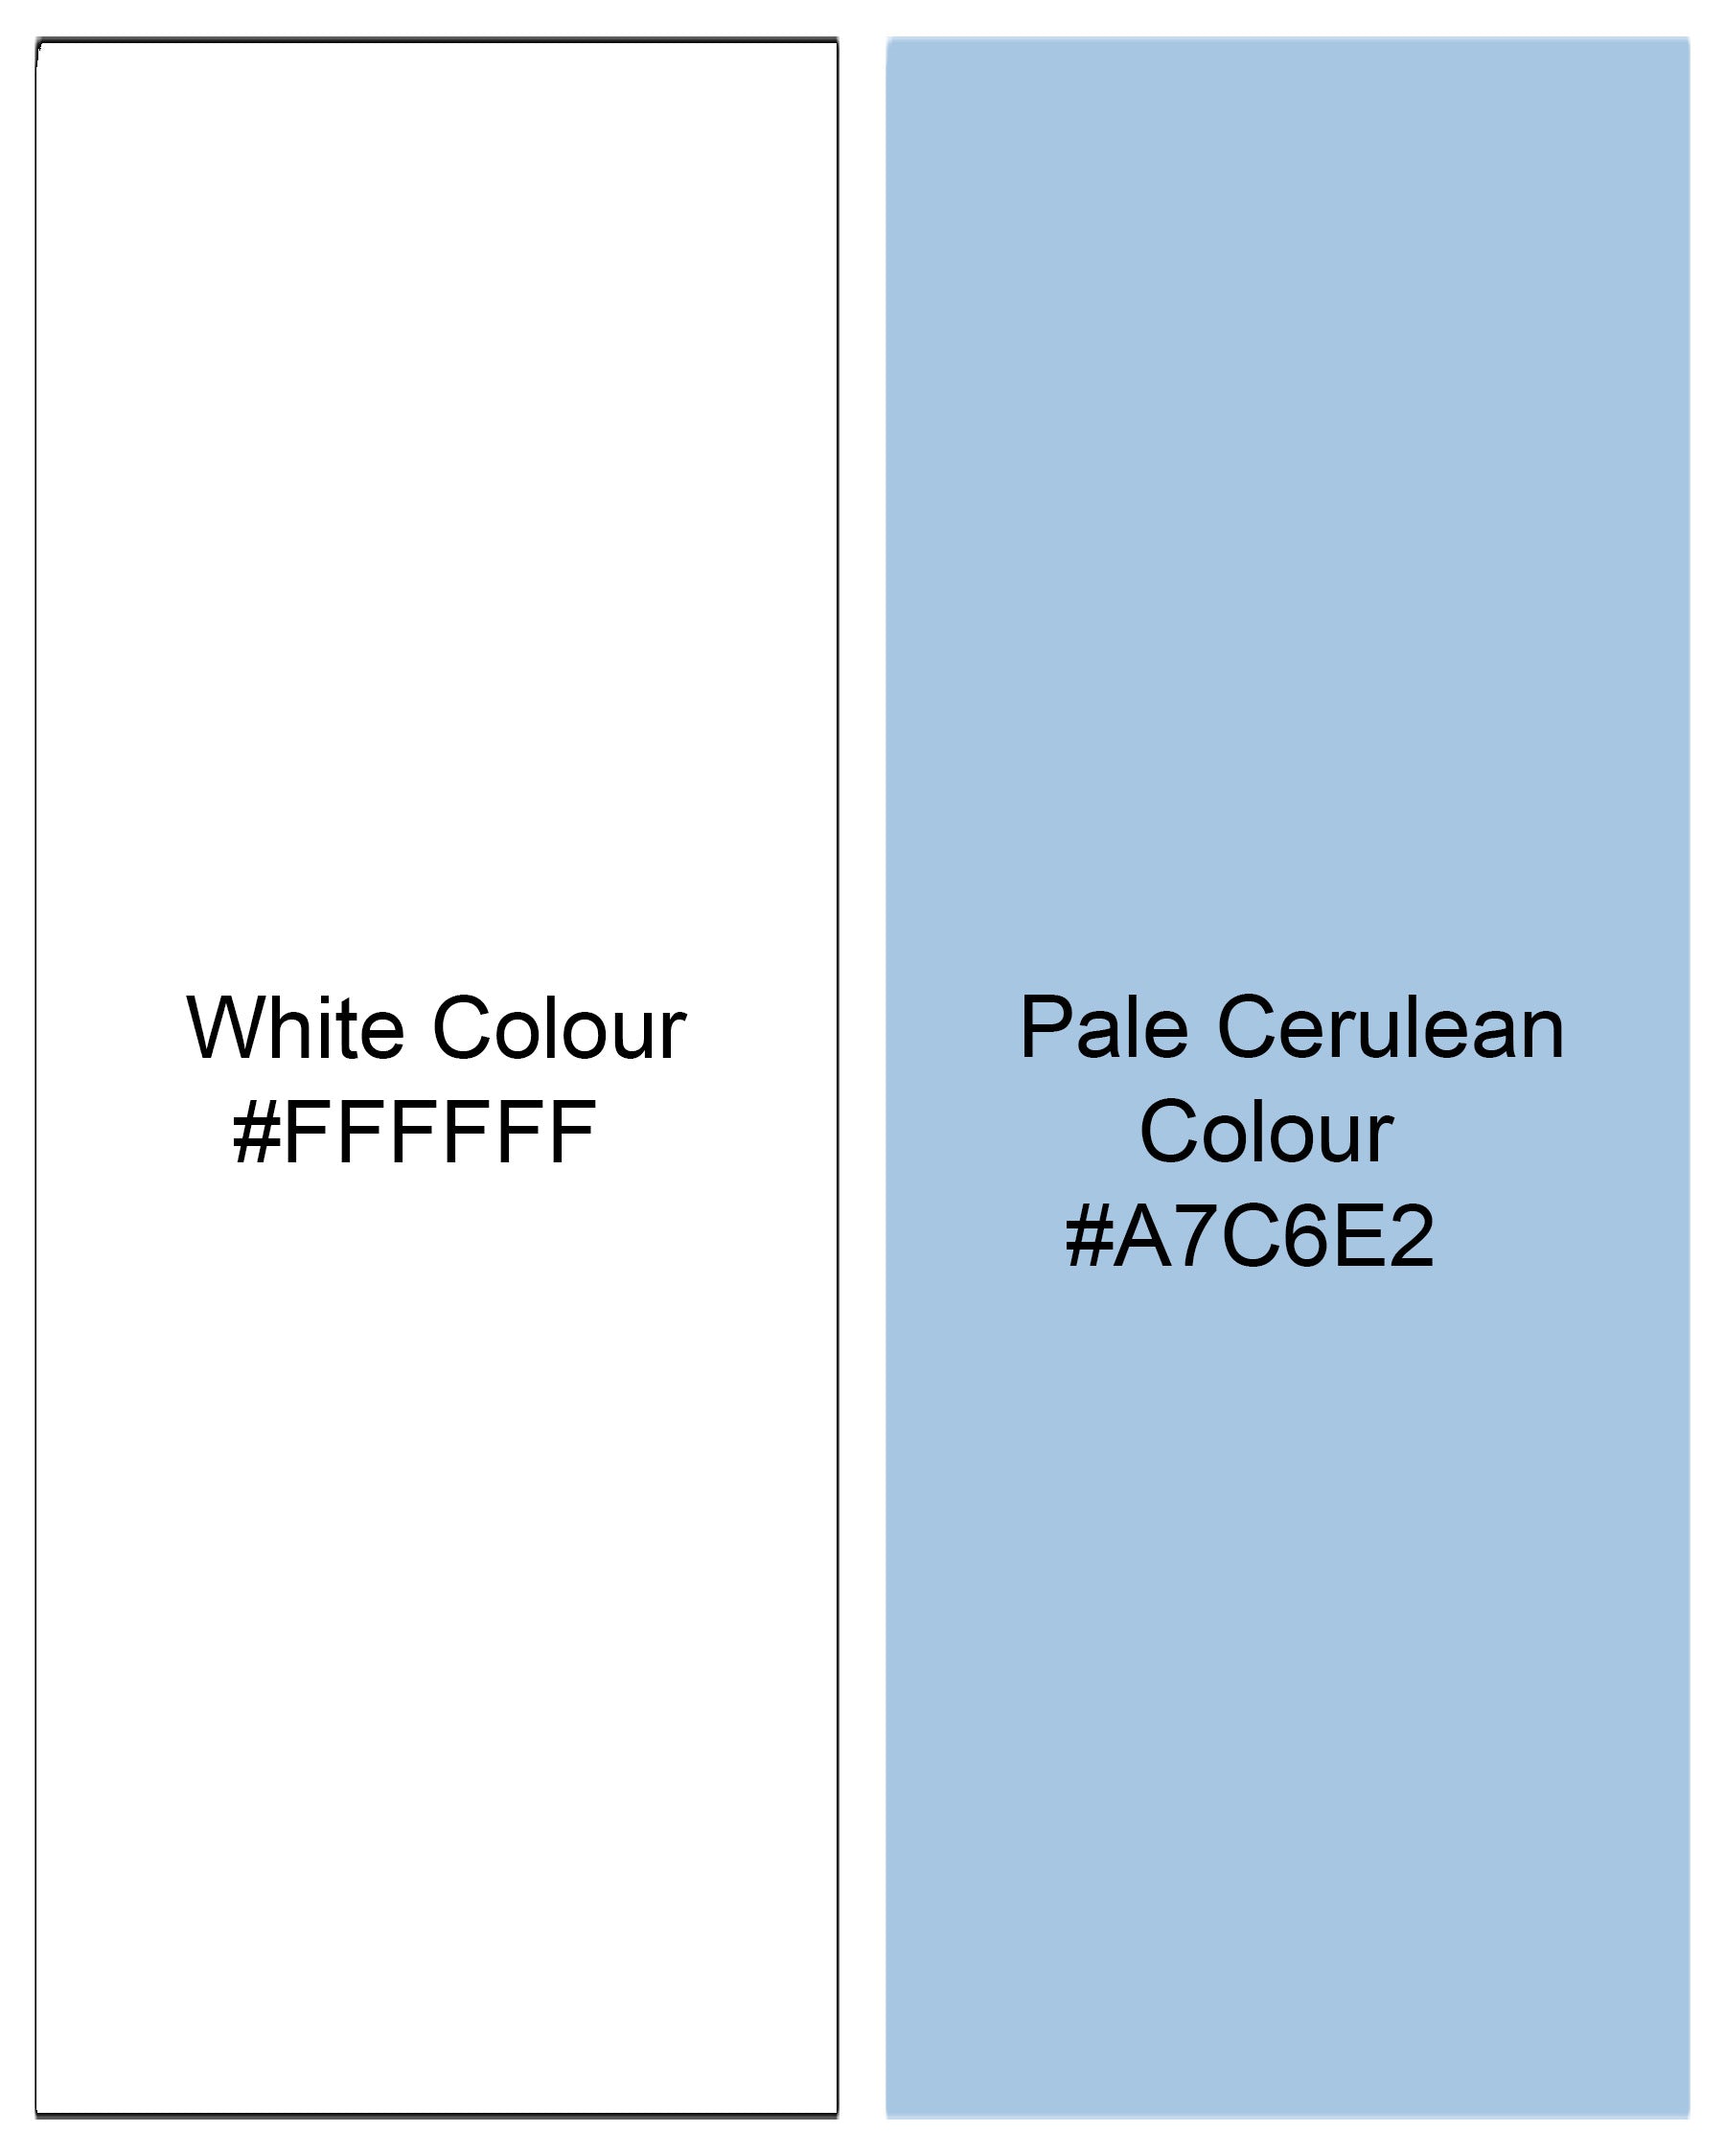 Pale Cerulean Blue With White Striped Dobby Textured Premium Giza Cotton Shirt 7911-M-38, 7911-M-H-38, 7911-M-39, 7911-M-H-39, 7911-M-40, 7911-M-H-40, 7911-M-42, 7911-M-H-42, 7911-M-44, 7911-M-H-44, 7911-M-46, 7911-M-H-46, 7911-M-48, 7911-M-H-48, 7911-M-50, 7911-M-H-50, 7911-M-52, 7911-M-H-52